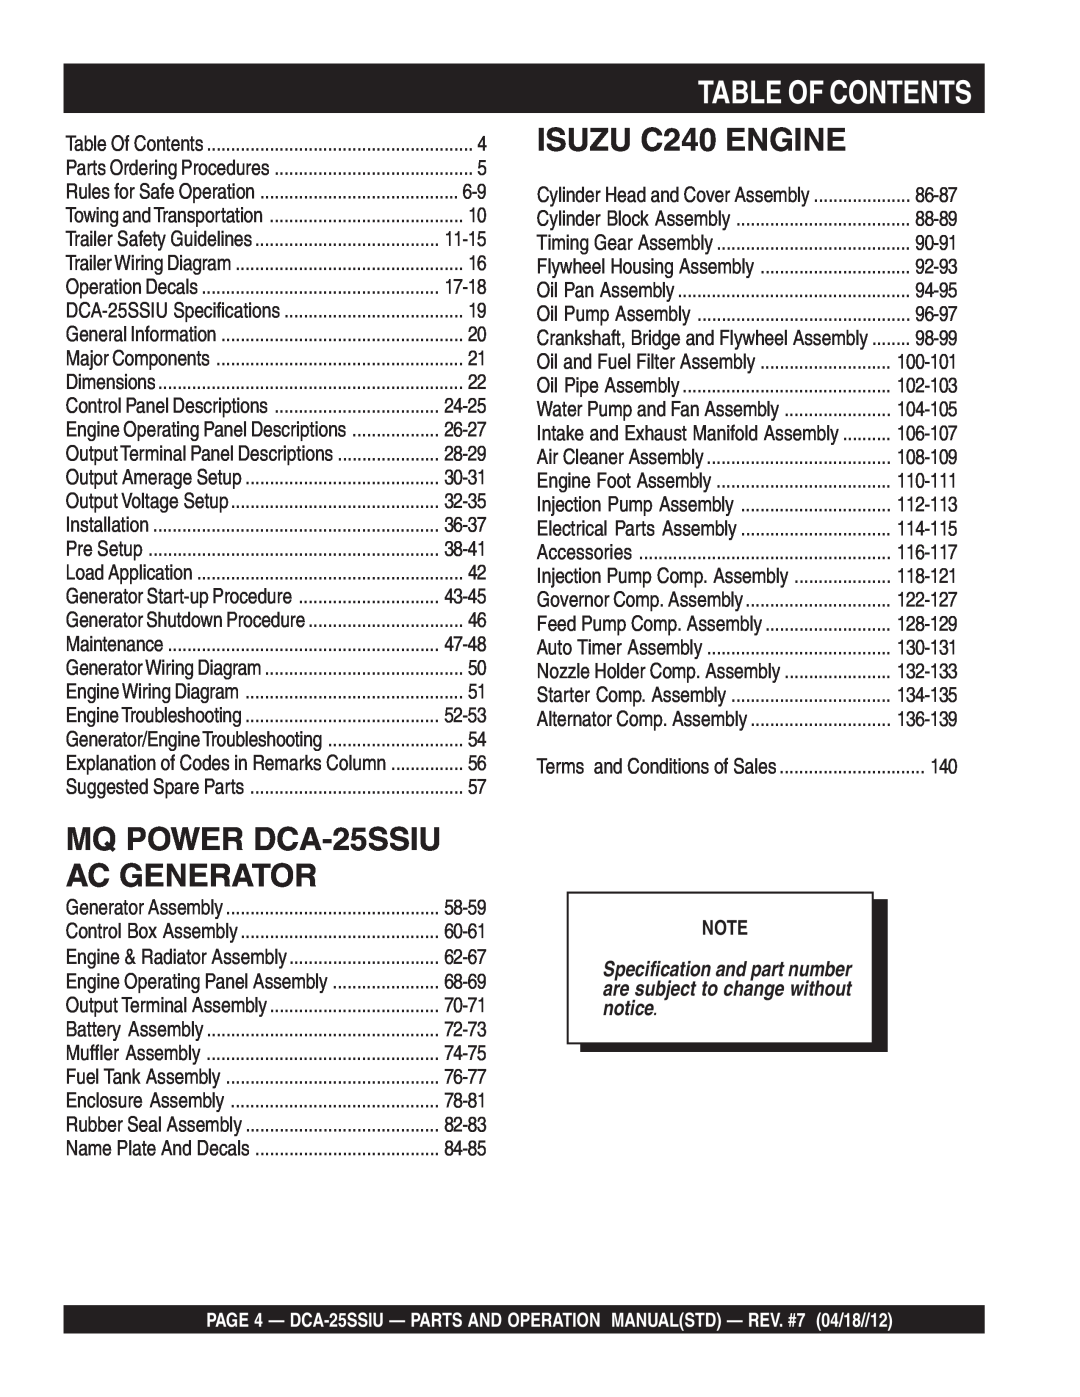 Multiquip DCA25SSIU manual Table Of Contents, ISUZU C240 ENGINE, MQ POWER DCA-25SSIUAC GENERATOR 